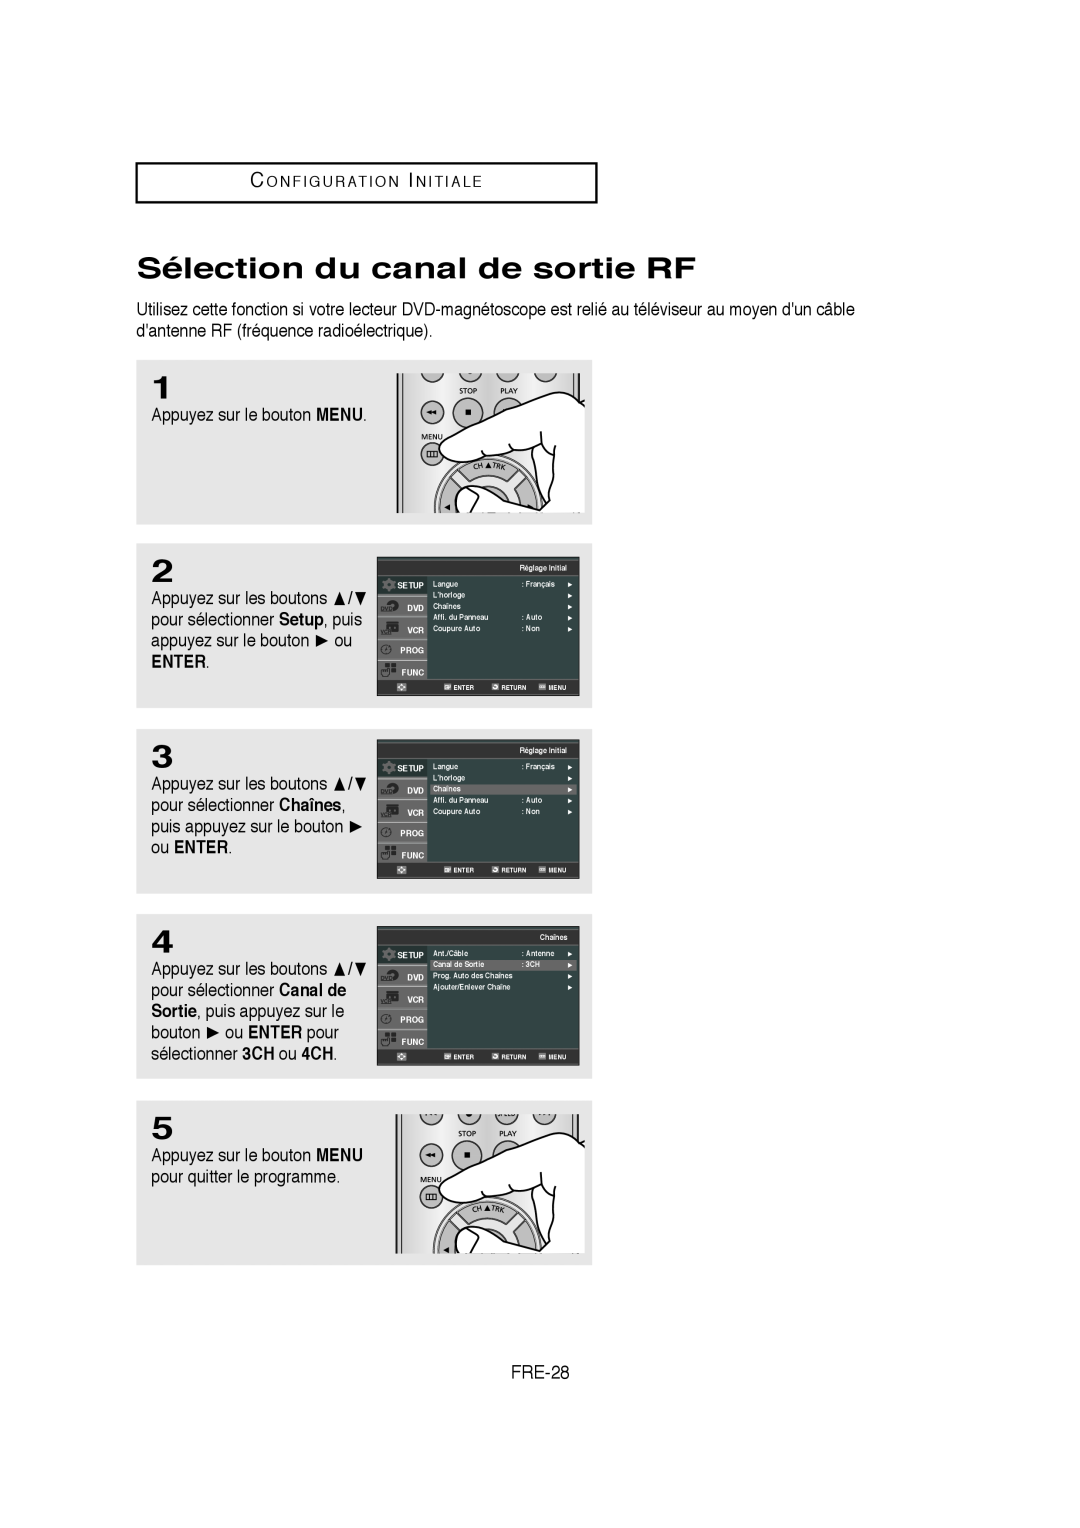 Samsung V6700-XAC, AK68-01304A, 20070205090323359 instruction manual Sélection du canal de sortie RF, FRE-28, Enter 